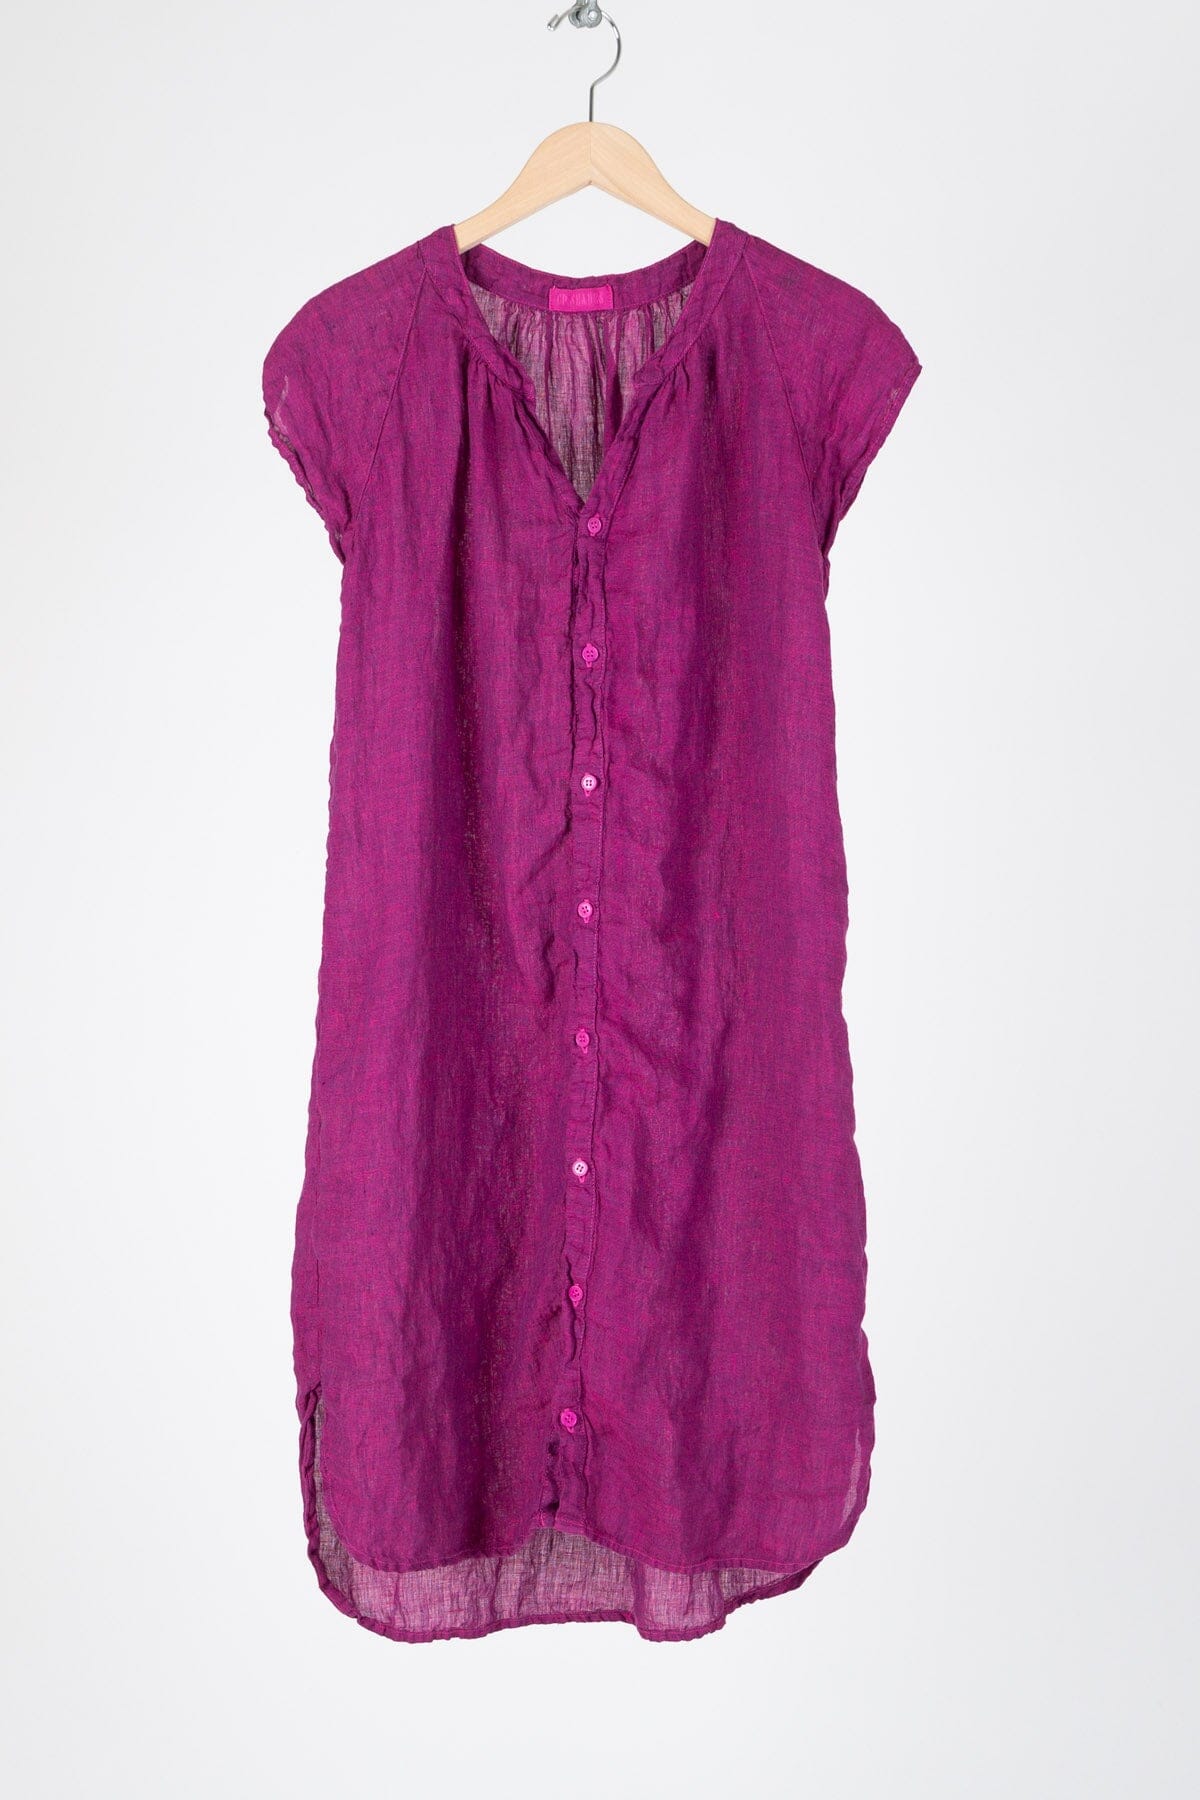 Lucille - Iridescent Linen S15 - Iridescent Skirts/Dresses CP Shades dragon fruit 162